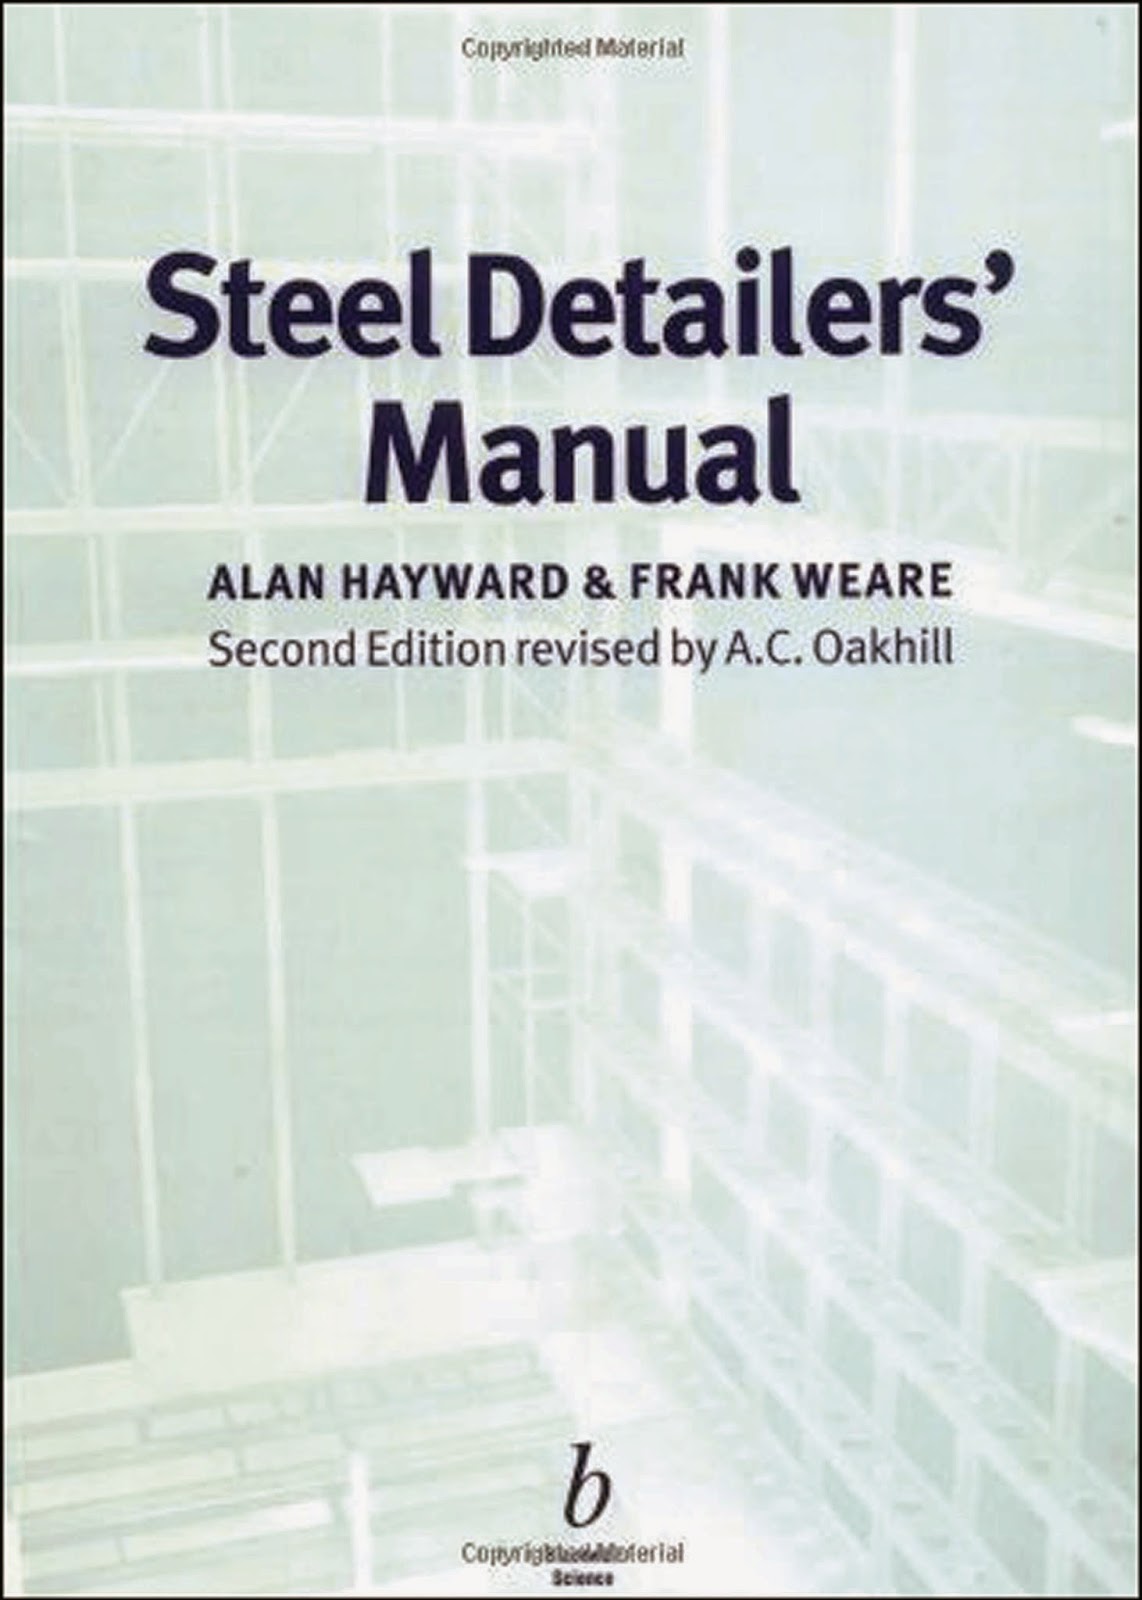 Book: Steel Detailer's Manual 2nd Edition by Alan Hayward, Frank Weare